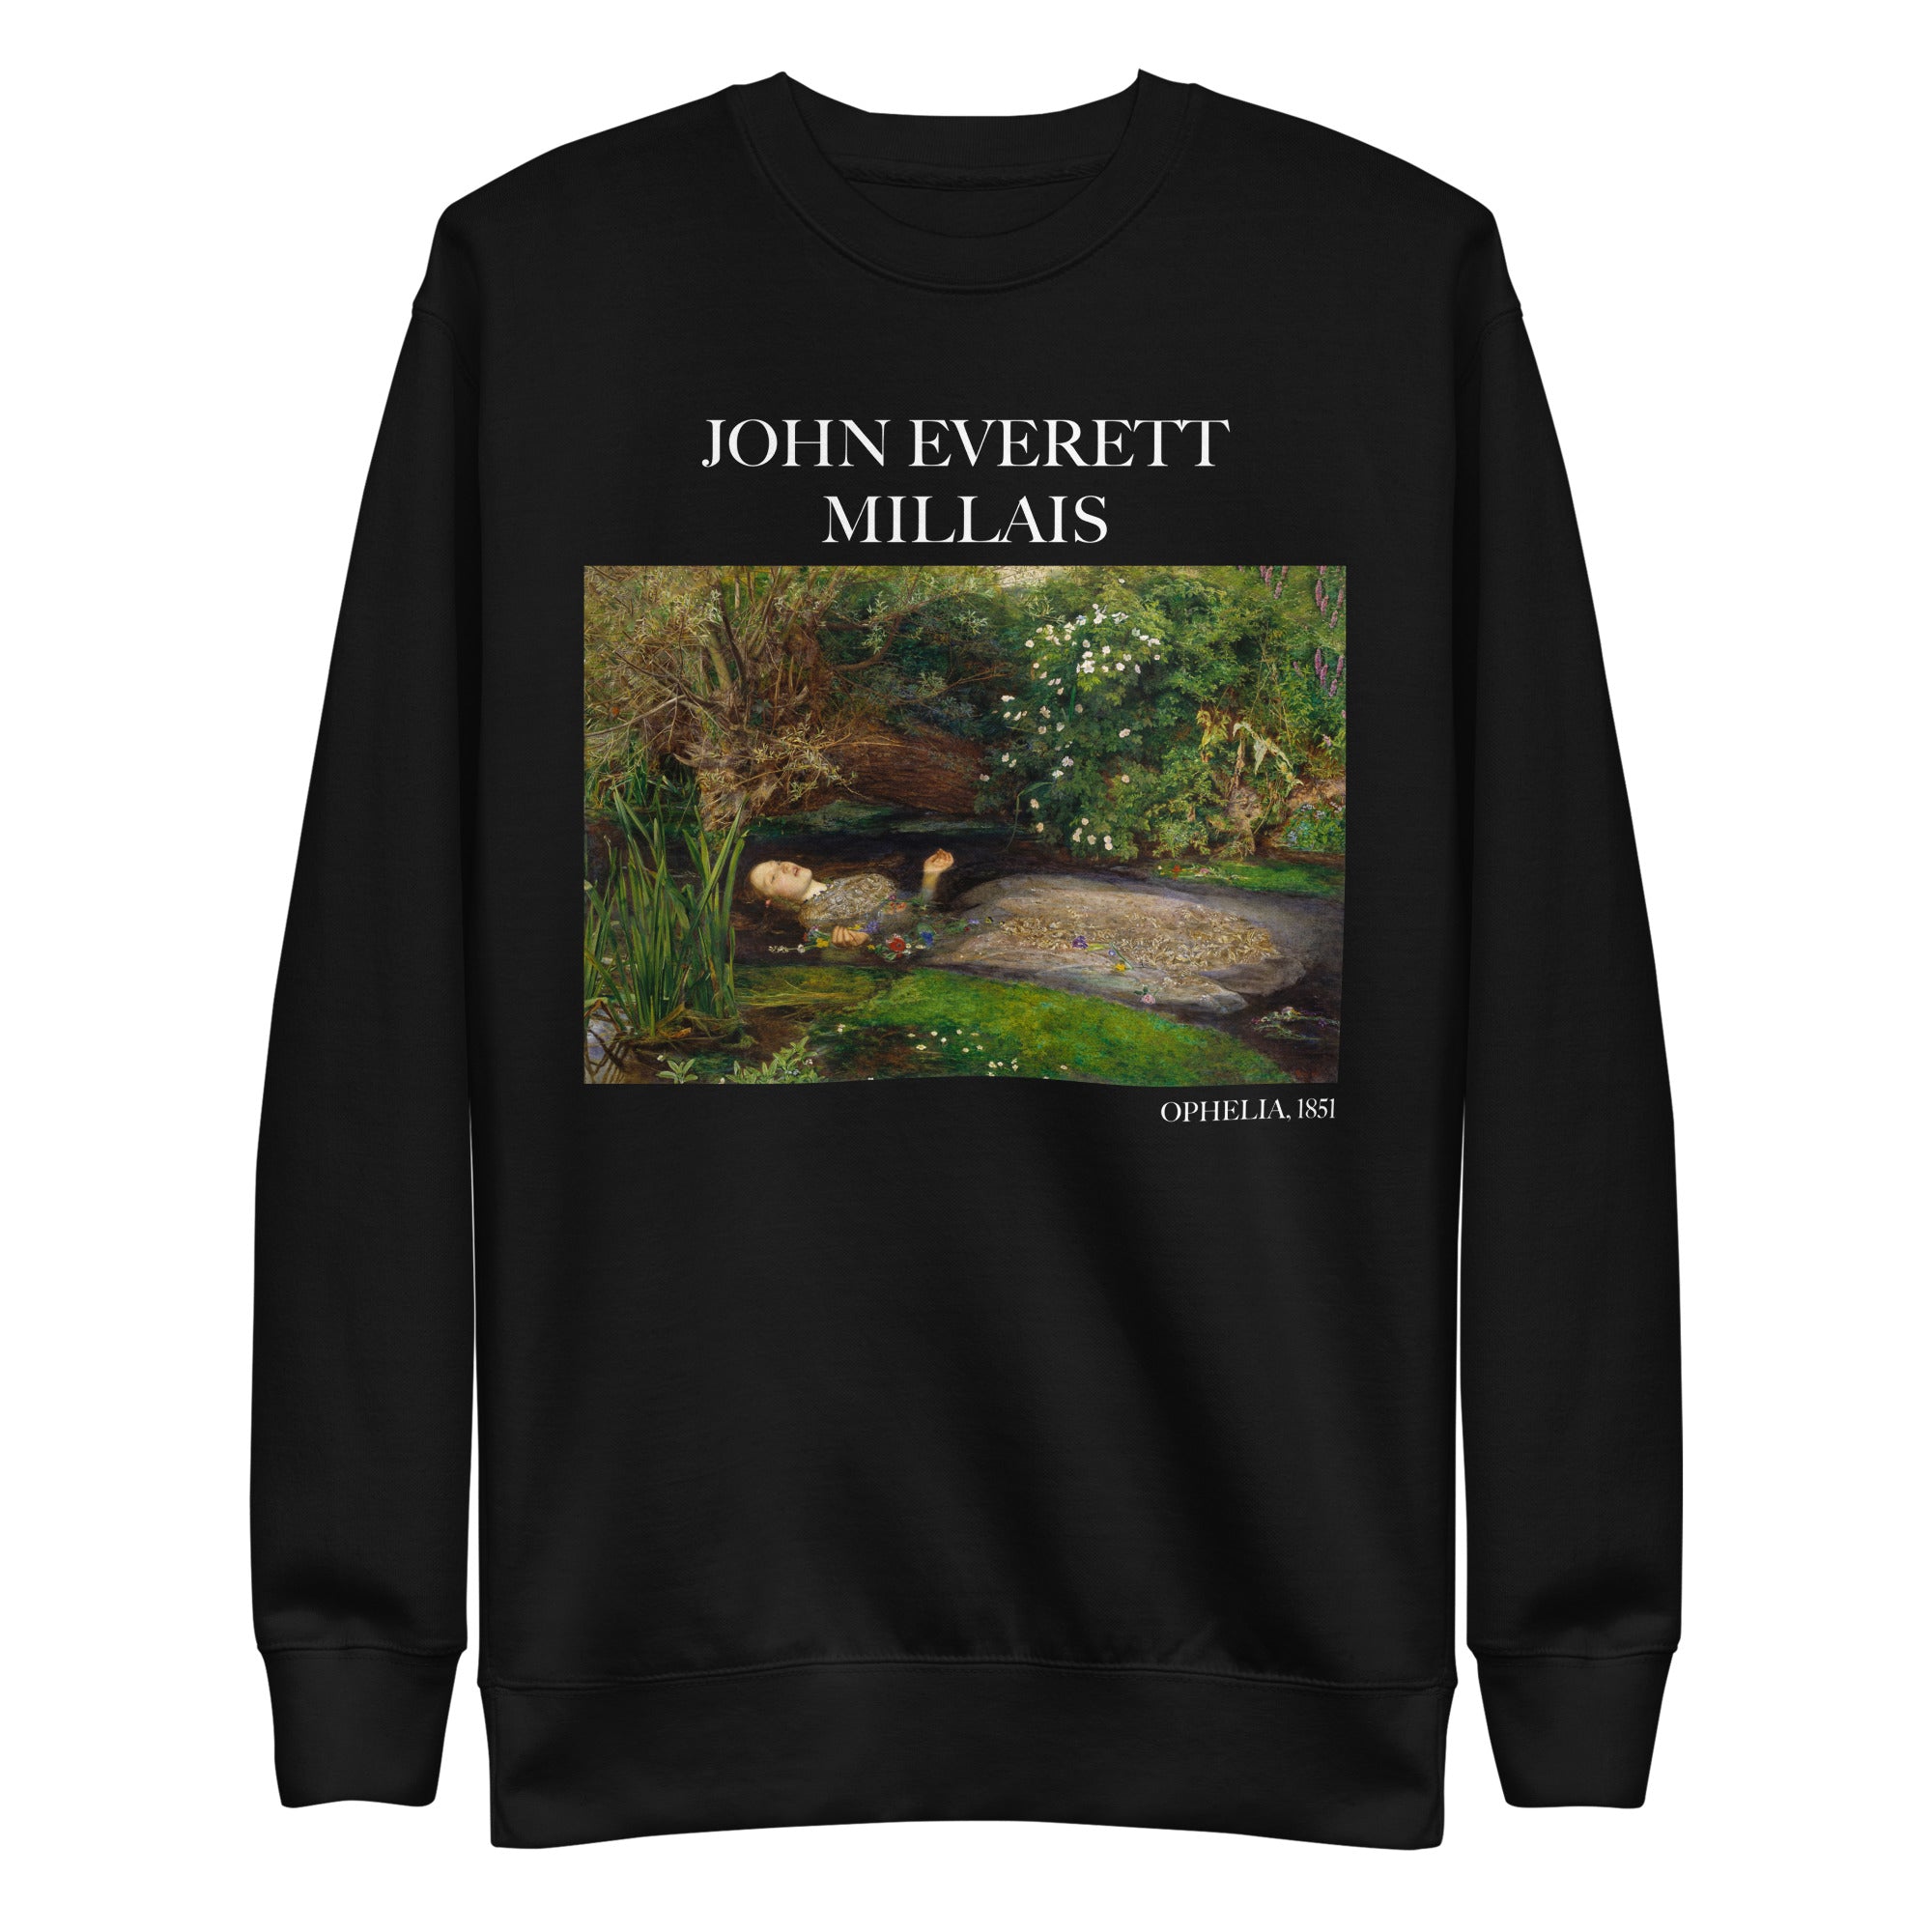 John Everett Millais 'Ophelia' Famous Painting Sweatshirt | Unisex Premium Sweatshirt